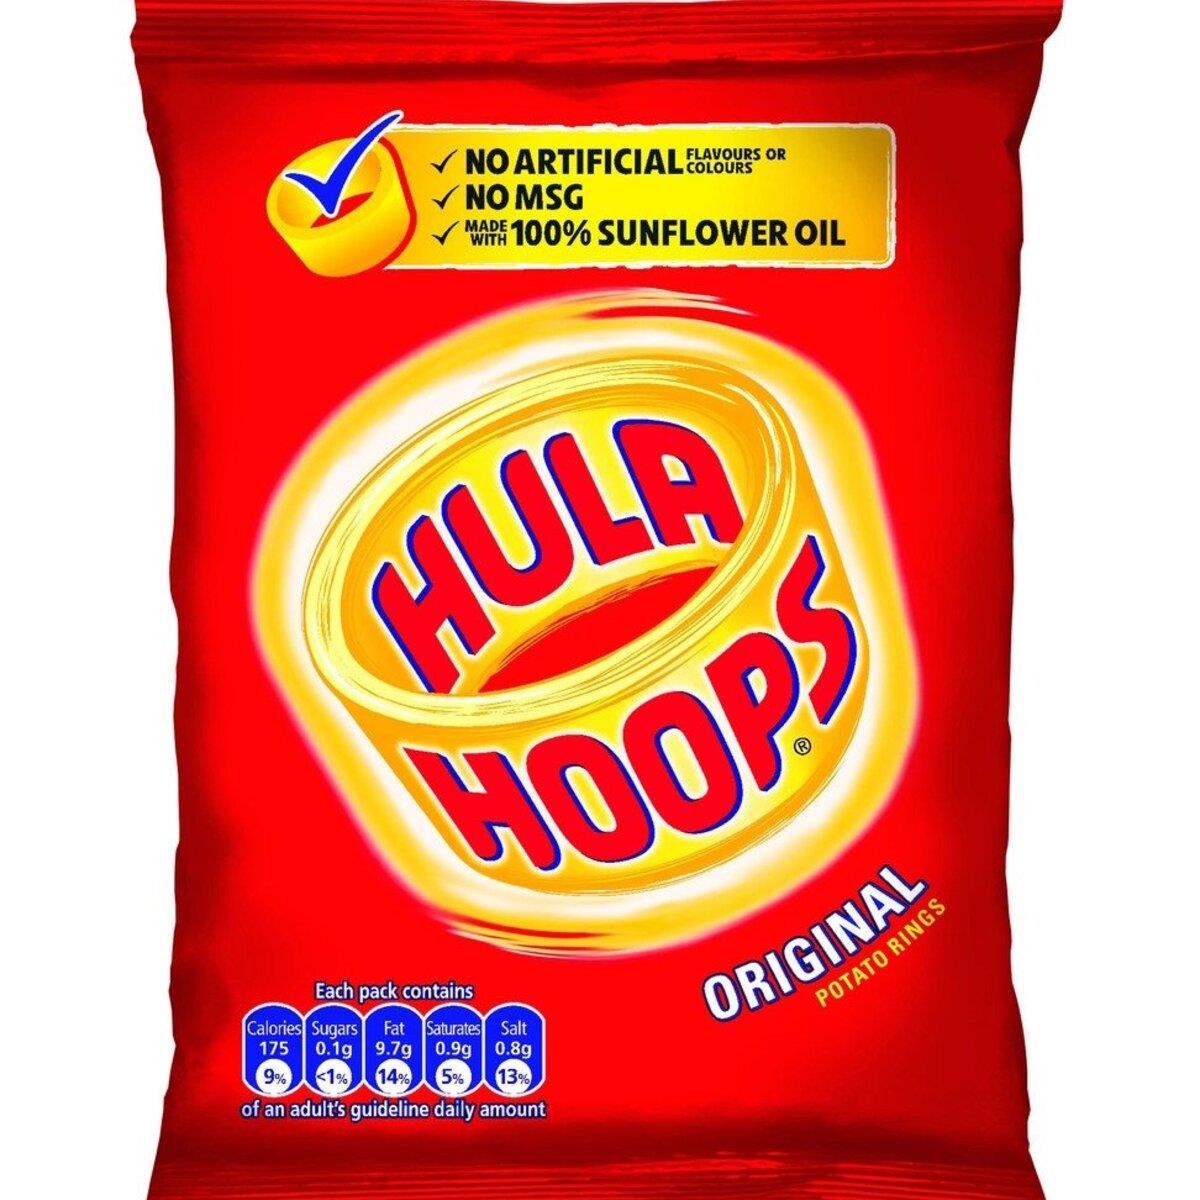 KP Hula Hoops Original Crisps 34g